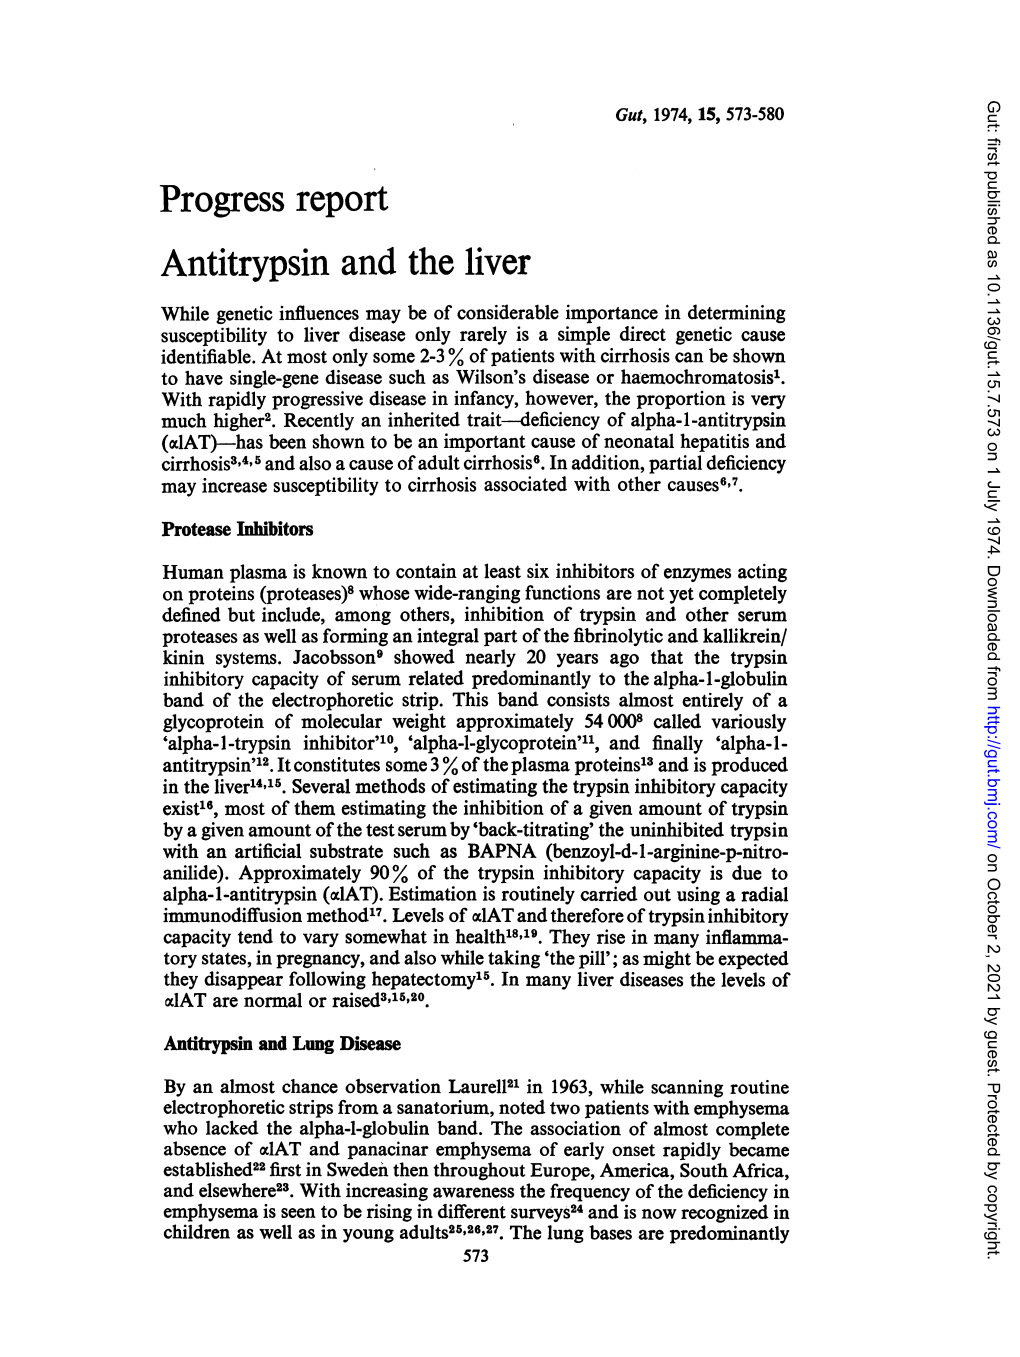 Progress Report Antitrypsin and the Liver